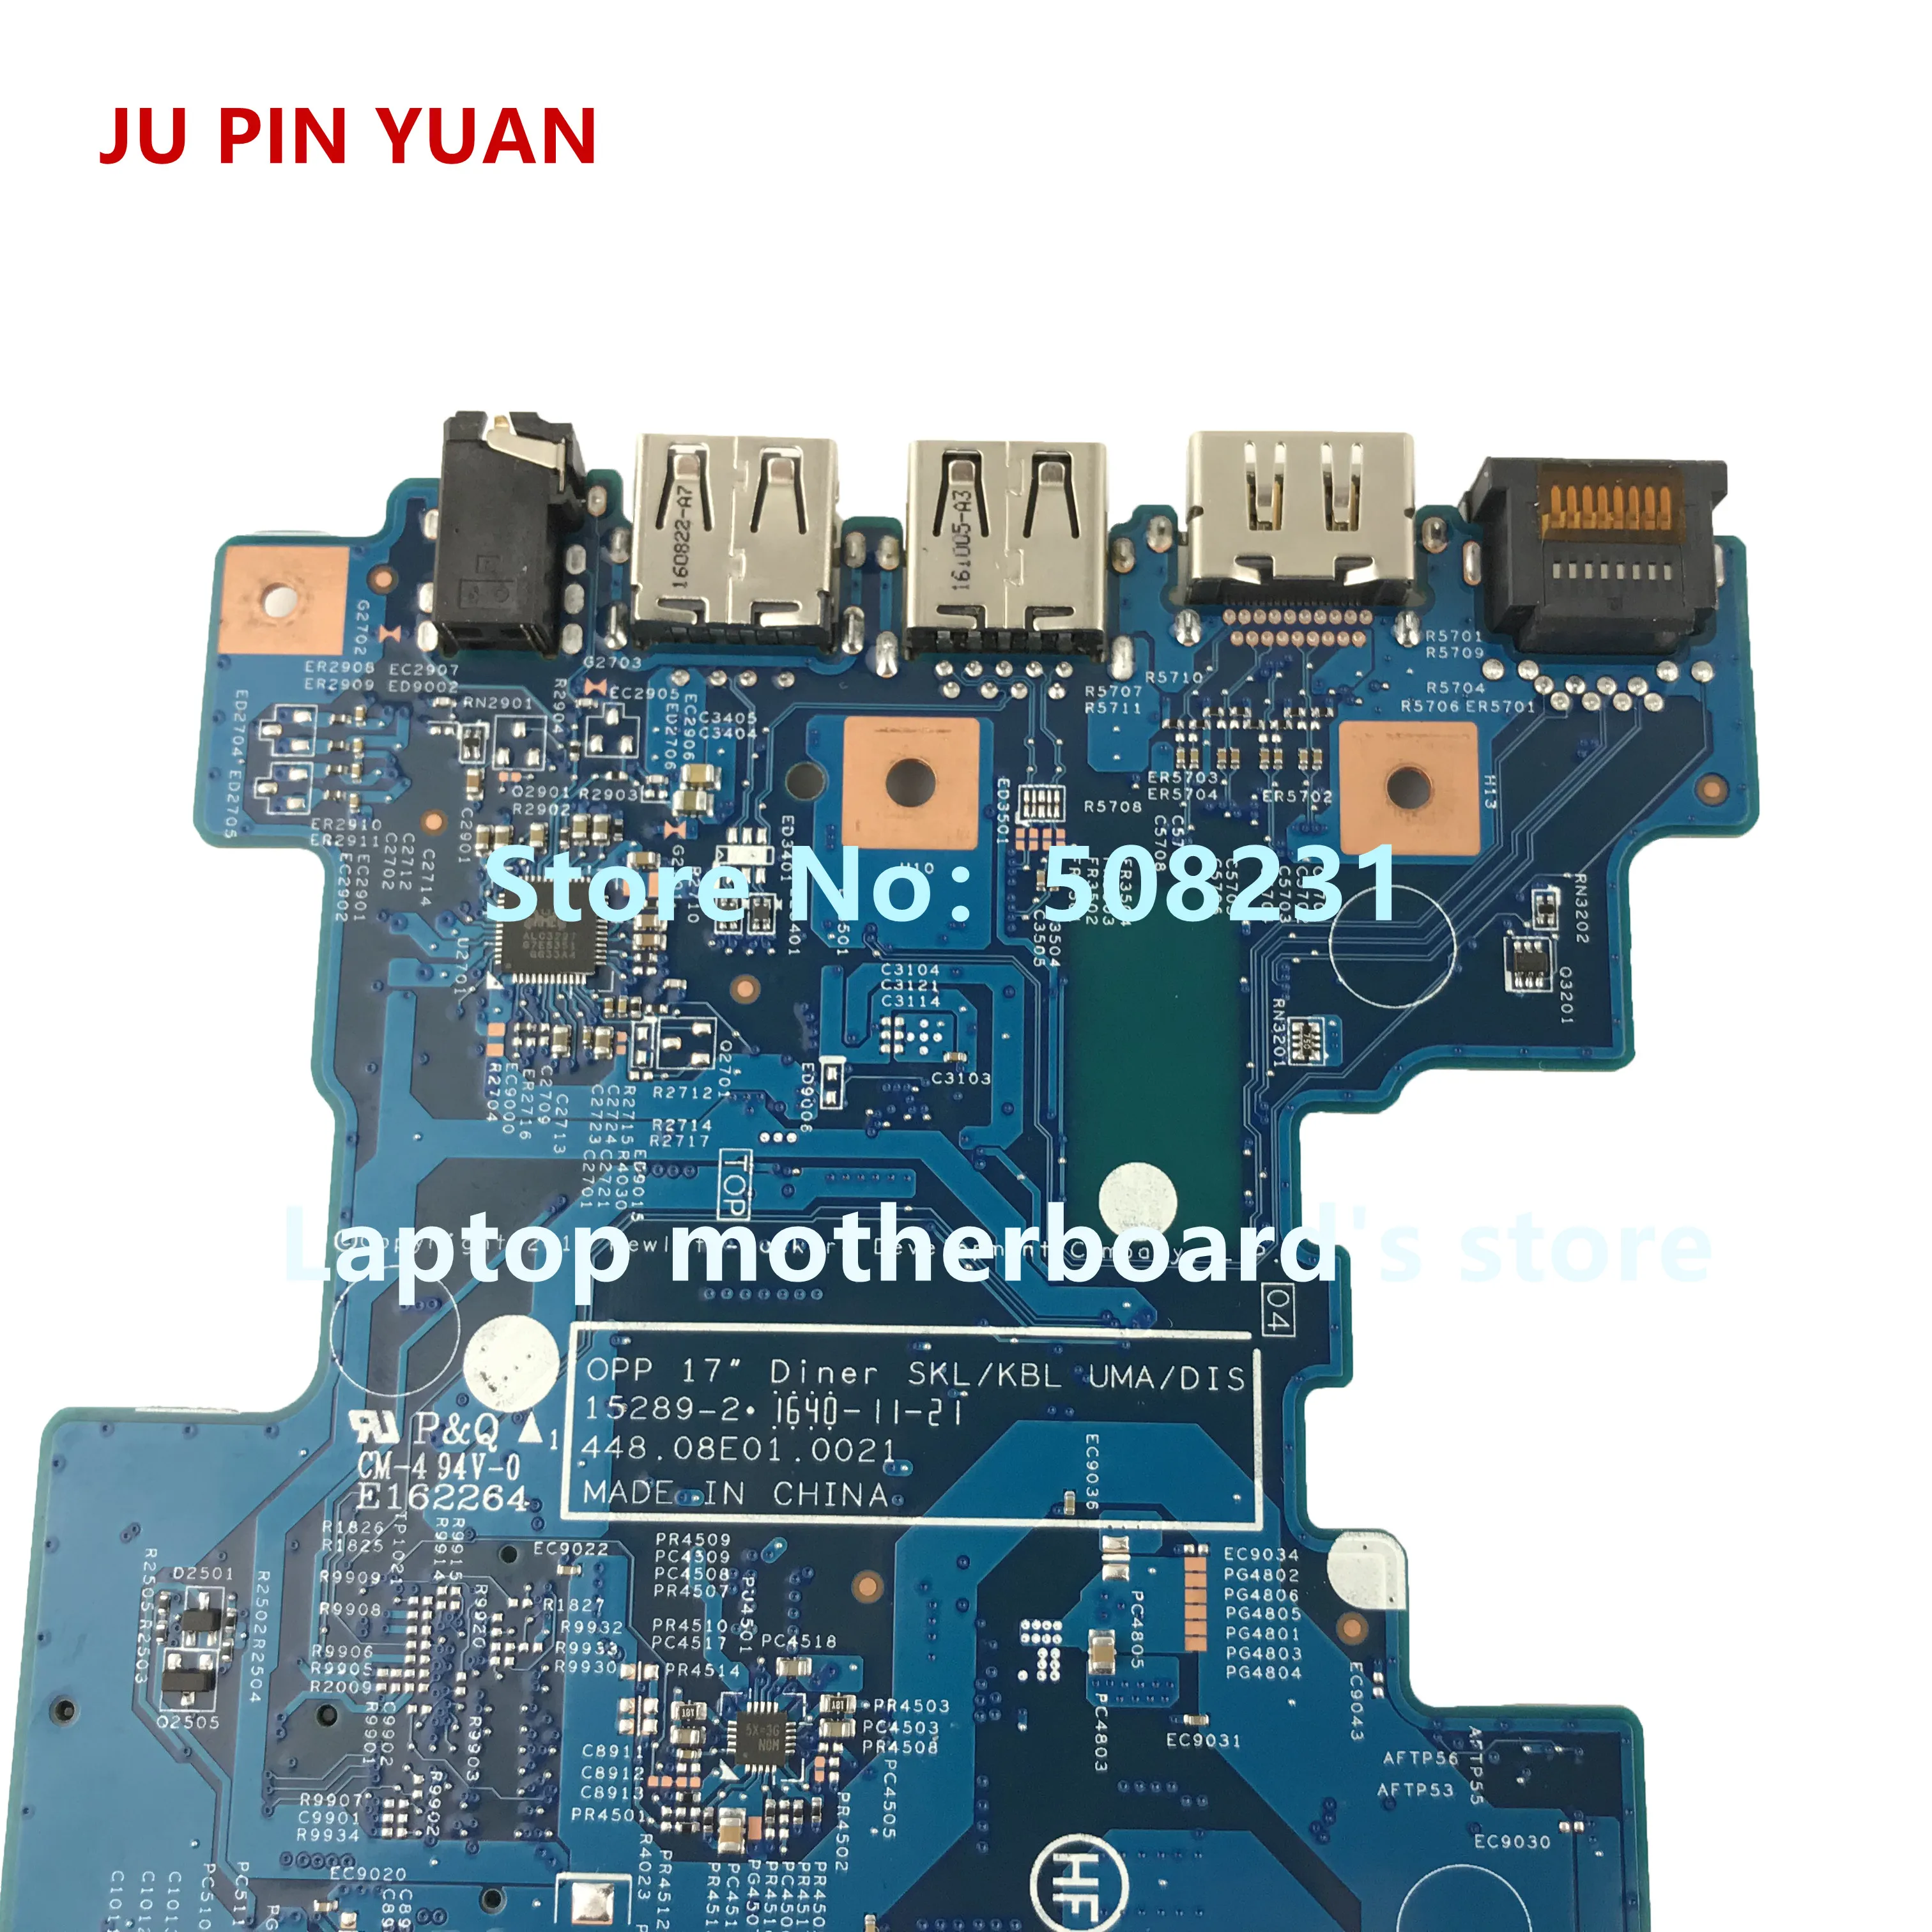 Ju pin yuan 859036-601 материнская плата для hp ноутбук 17-X 17T-X 17-X115DX Материнская плата ноутбука 15289-2 448.08E01.0021 с i3-7100U